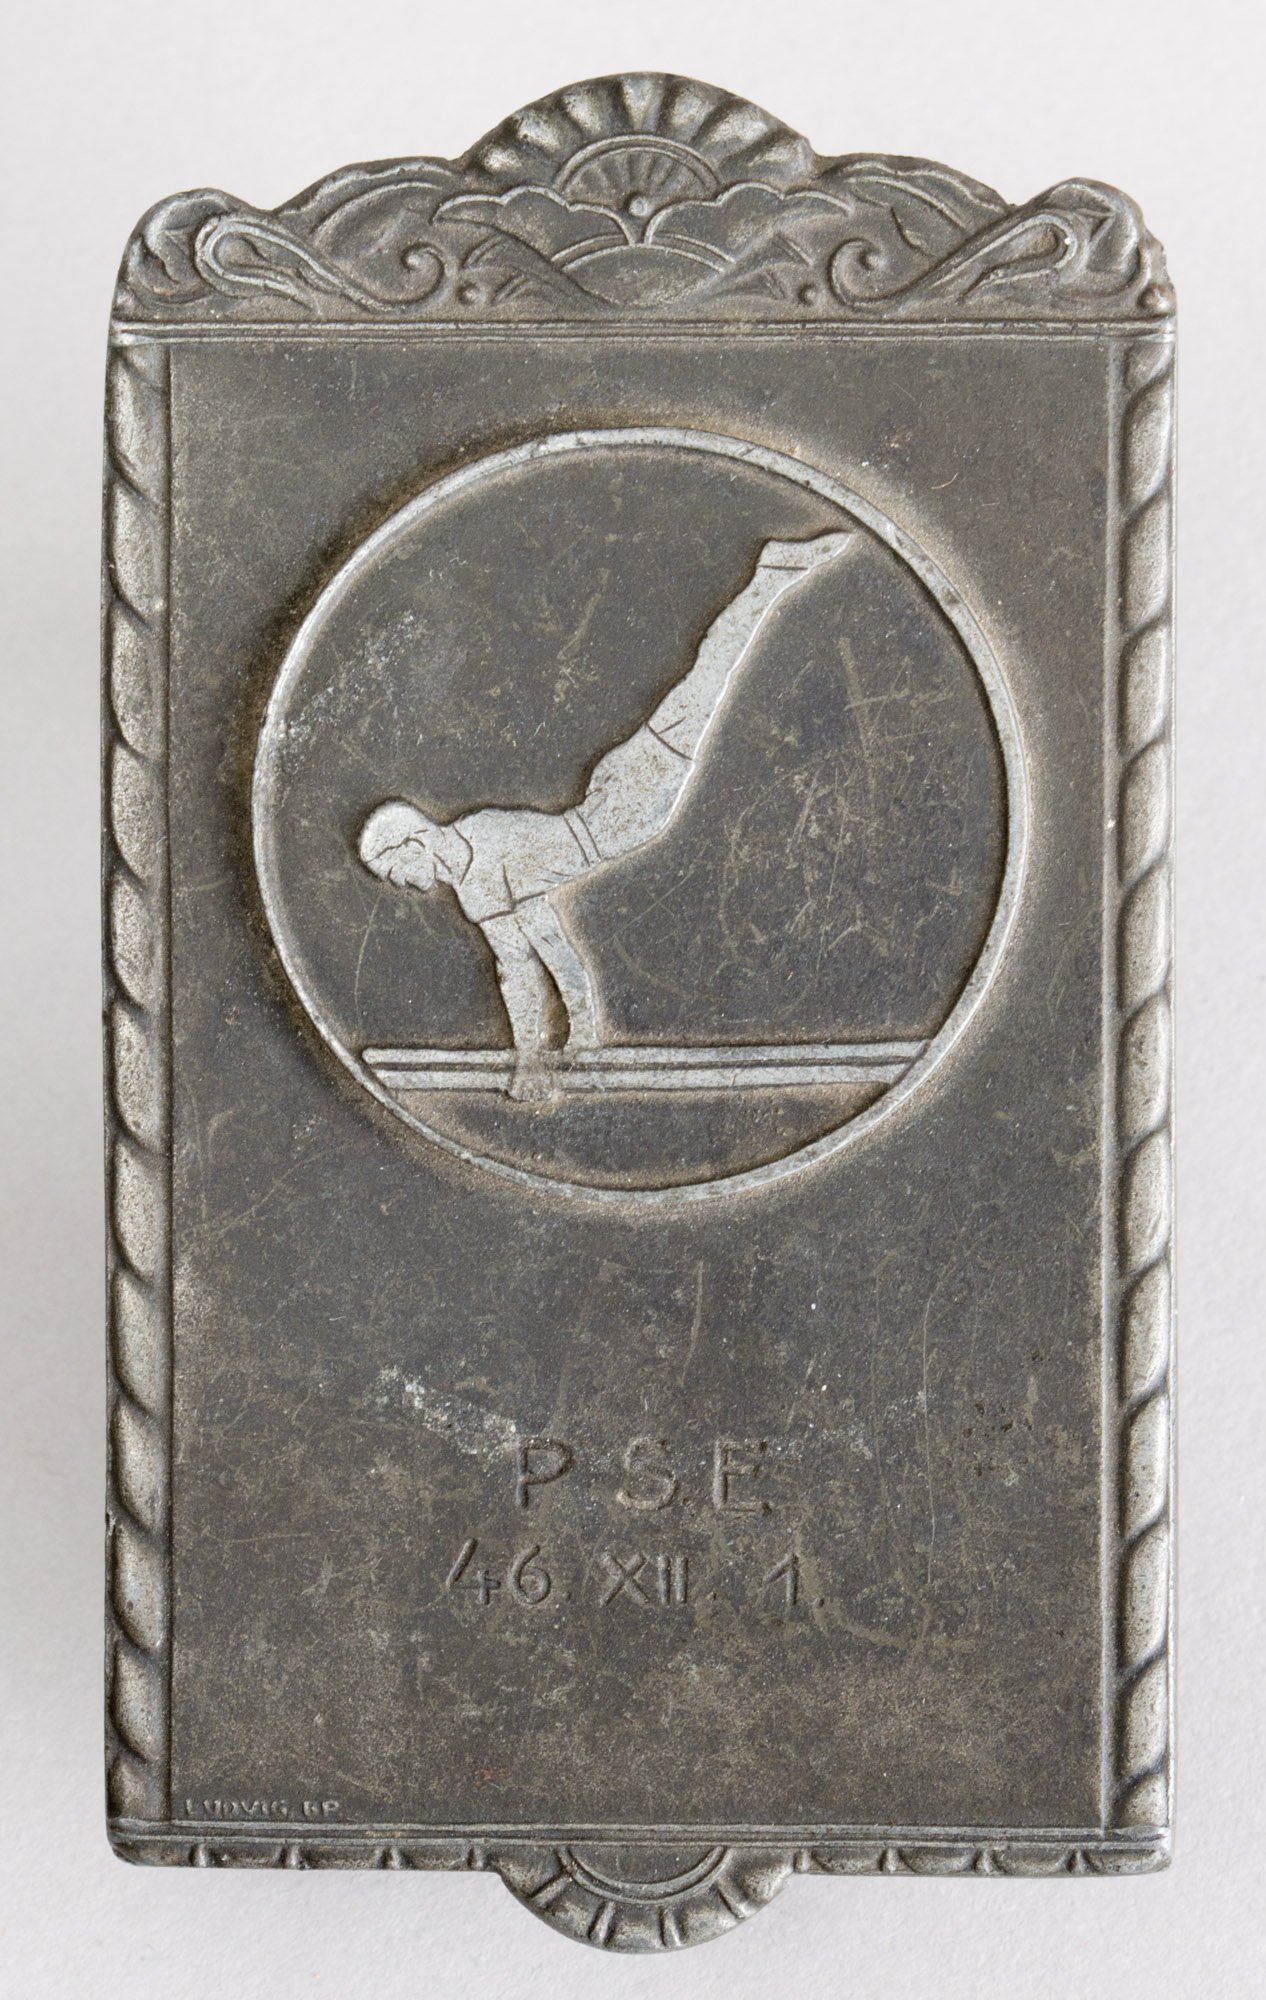 Emlékplakett (bronz) „PSE [19]46. XII.1.” (Postamúzeum CC BY-NC-SA)